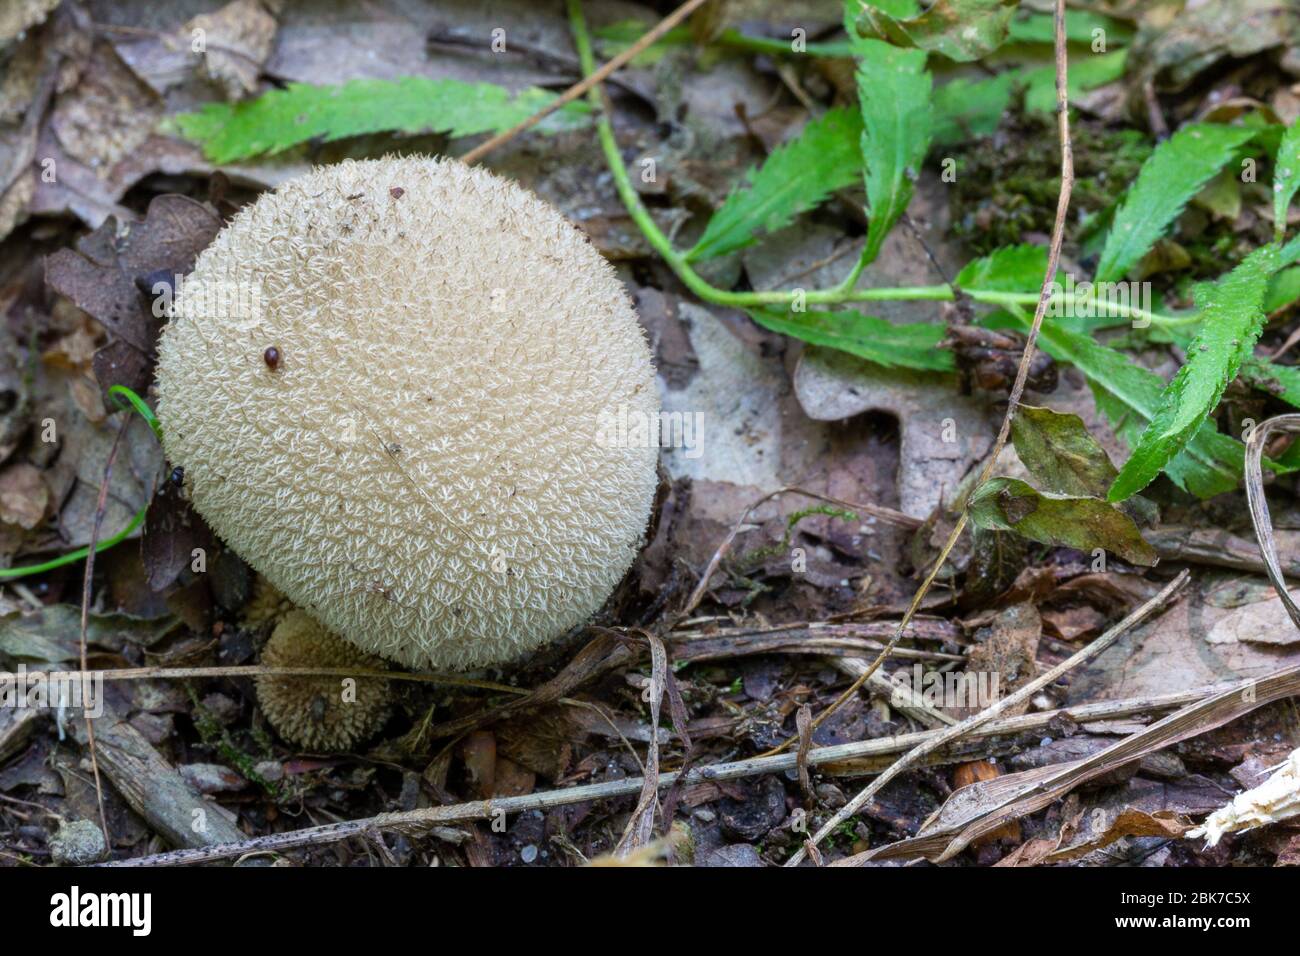 edible medicinal mushroom raincoat (Lycoperdon perlatum) close up in the natural environment Stock Photo